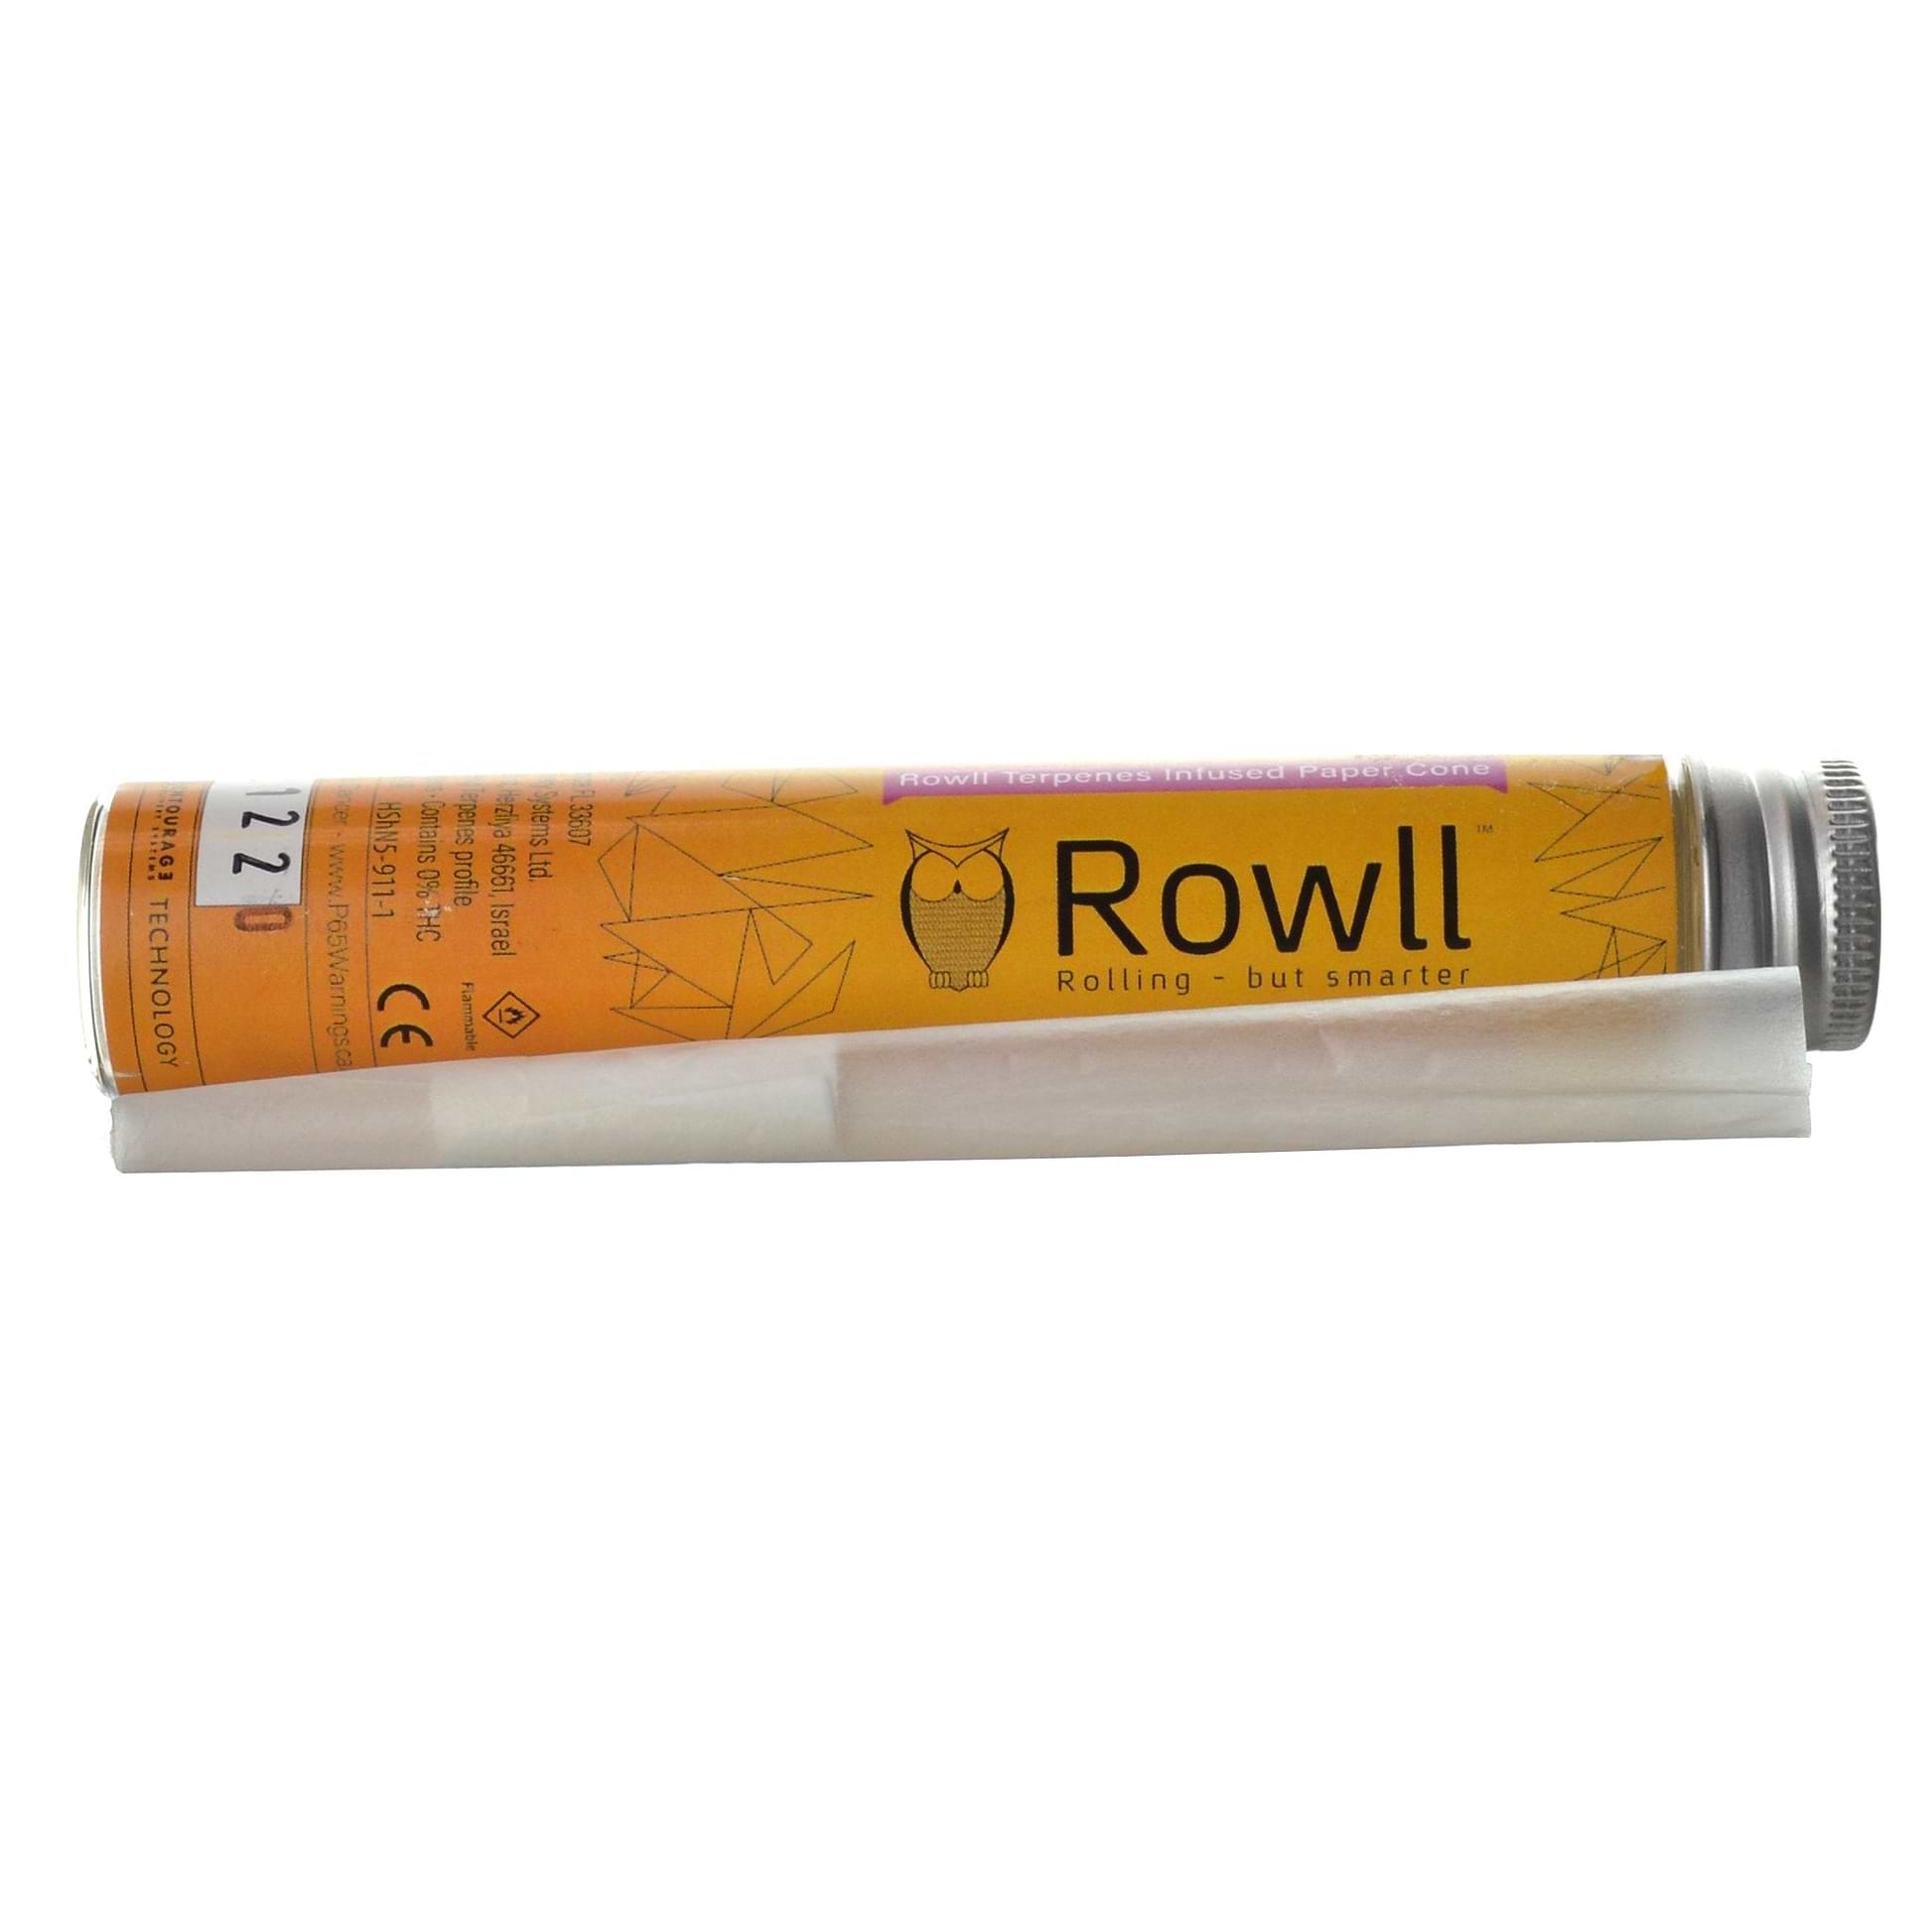 Rowll Terpenes Infused Pre-rolled Cone